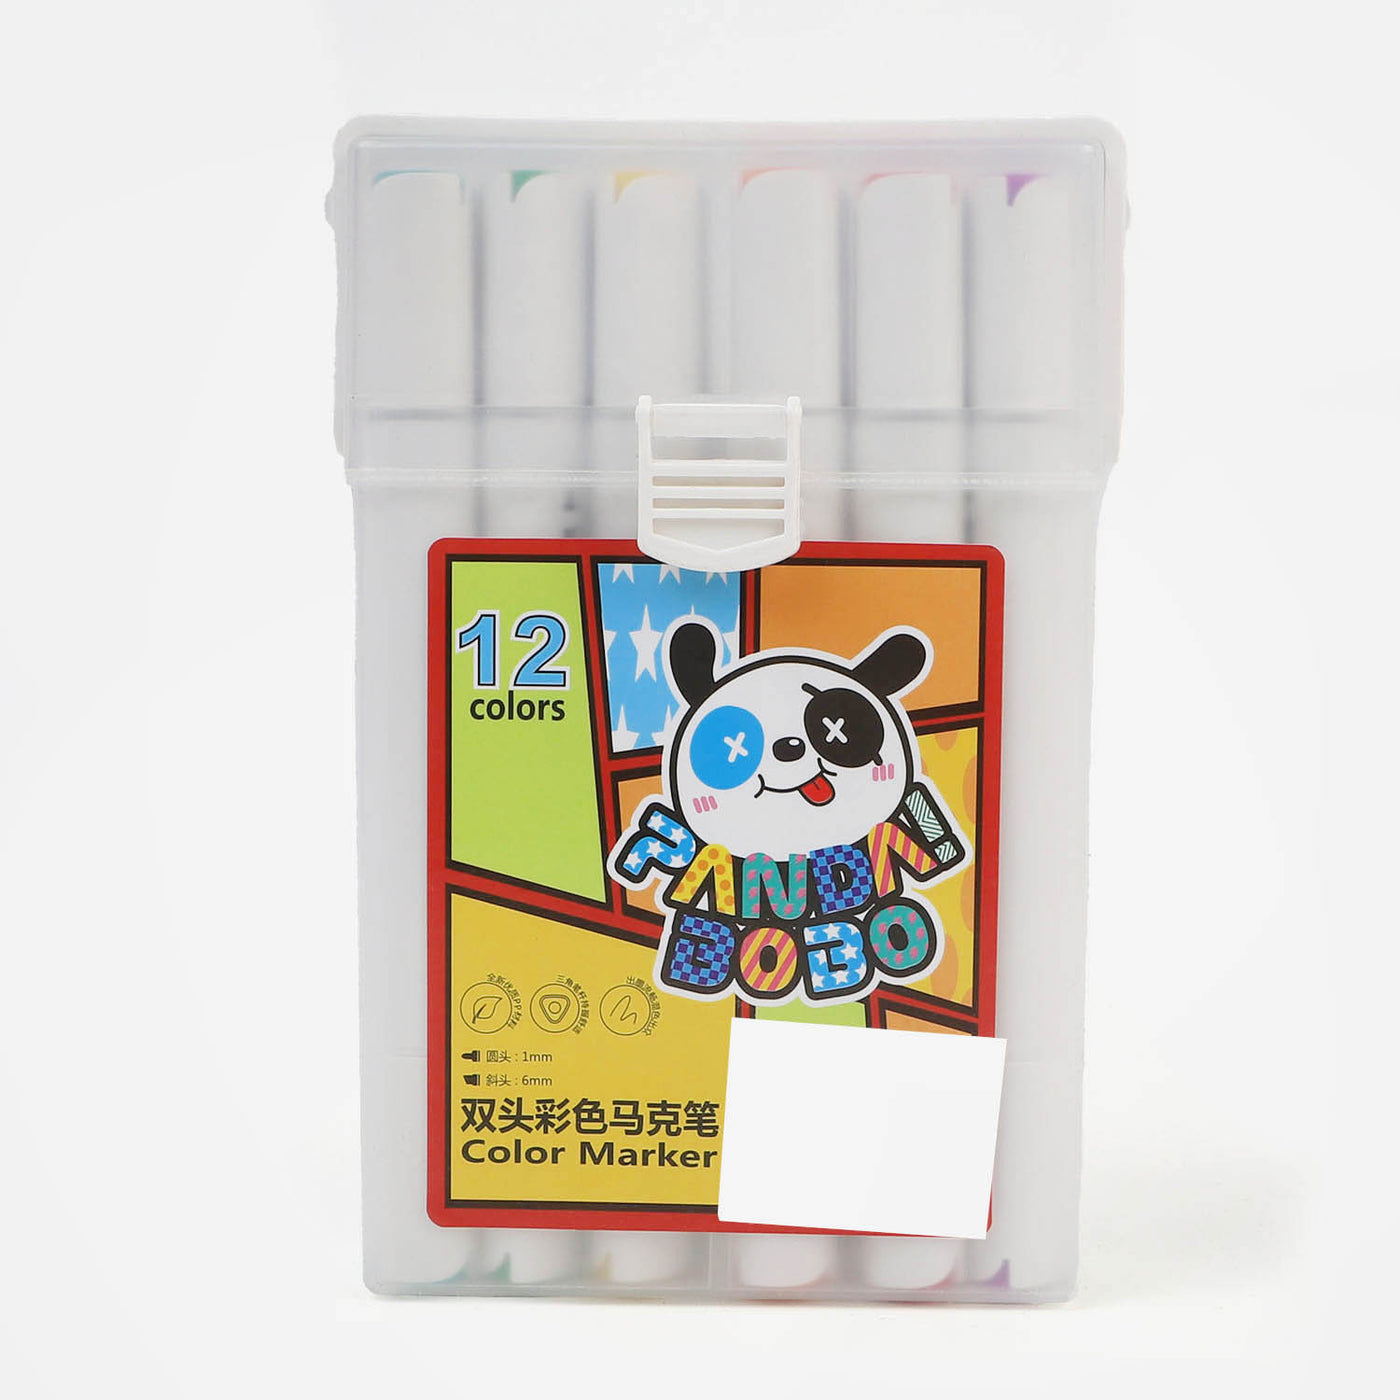 Panda Bobo 12Color